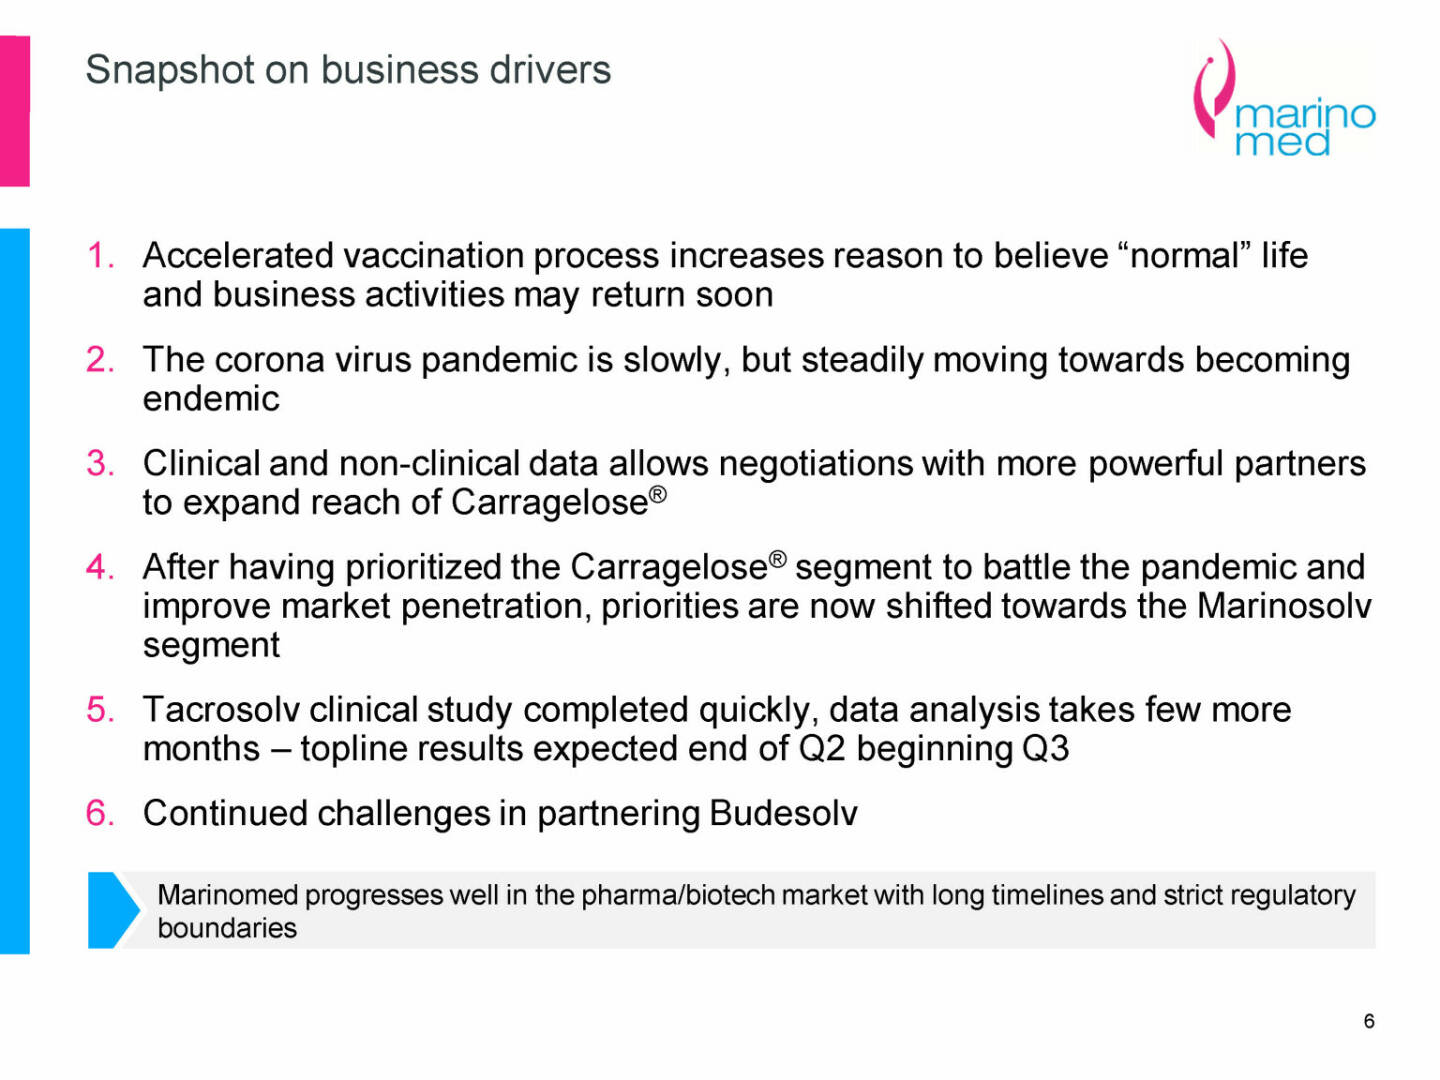 Marinomed - Snapshot on business drivers